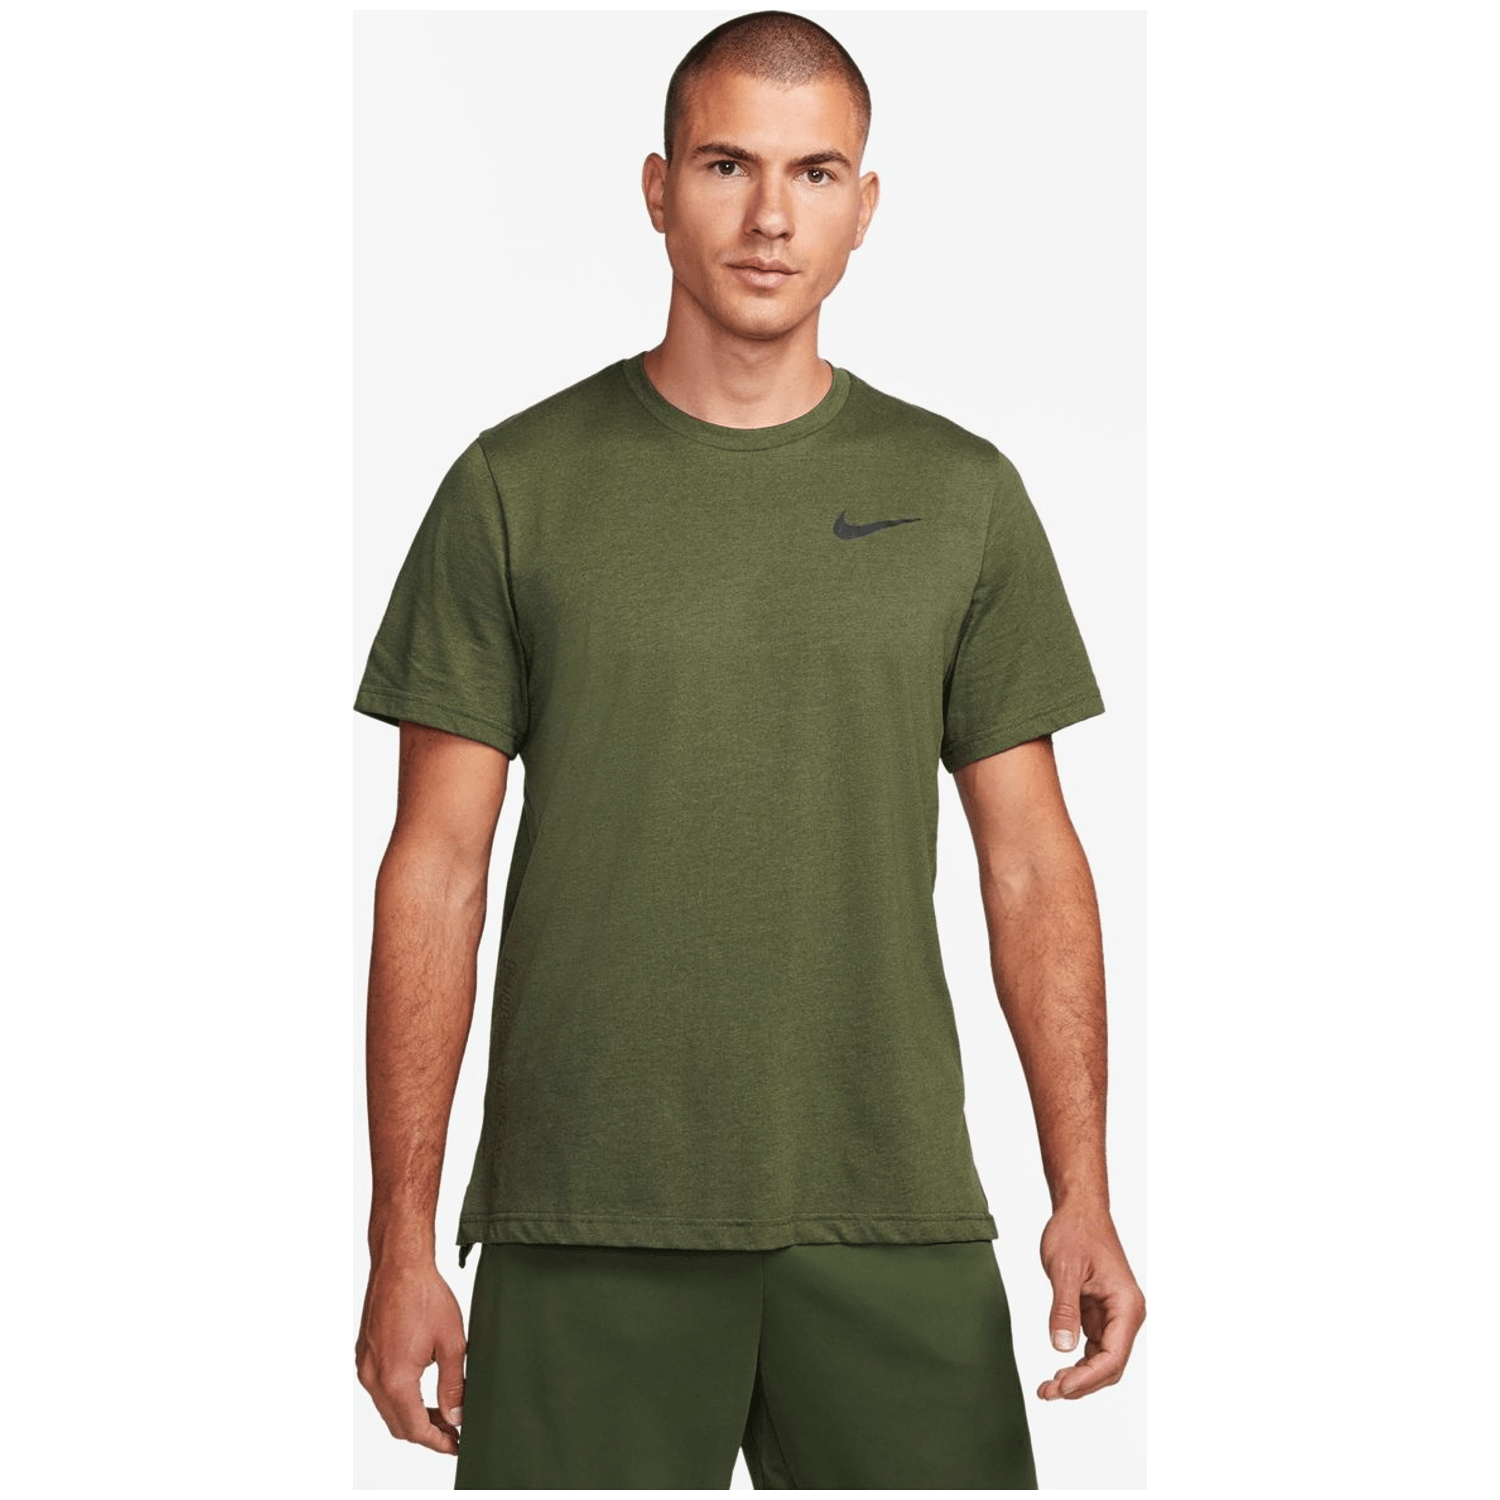 Nike Pro Dri-FIT Top Herren T-Shirt